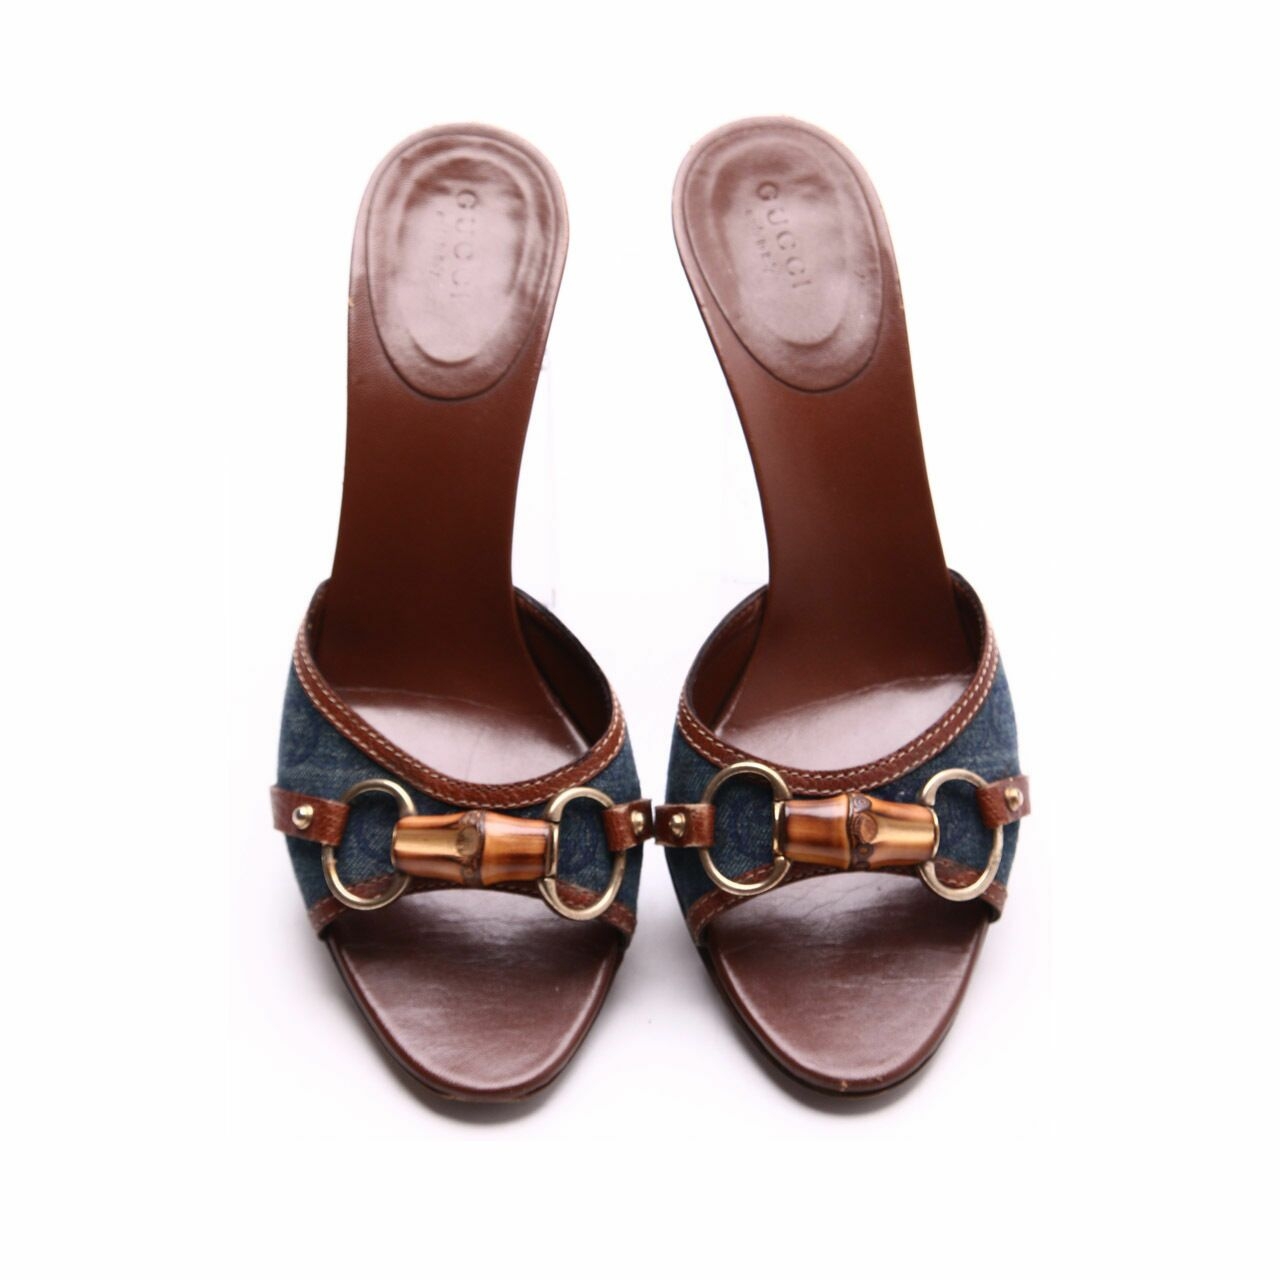 Gucci Denim Monogram Sandals Blue Heels